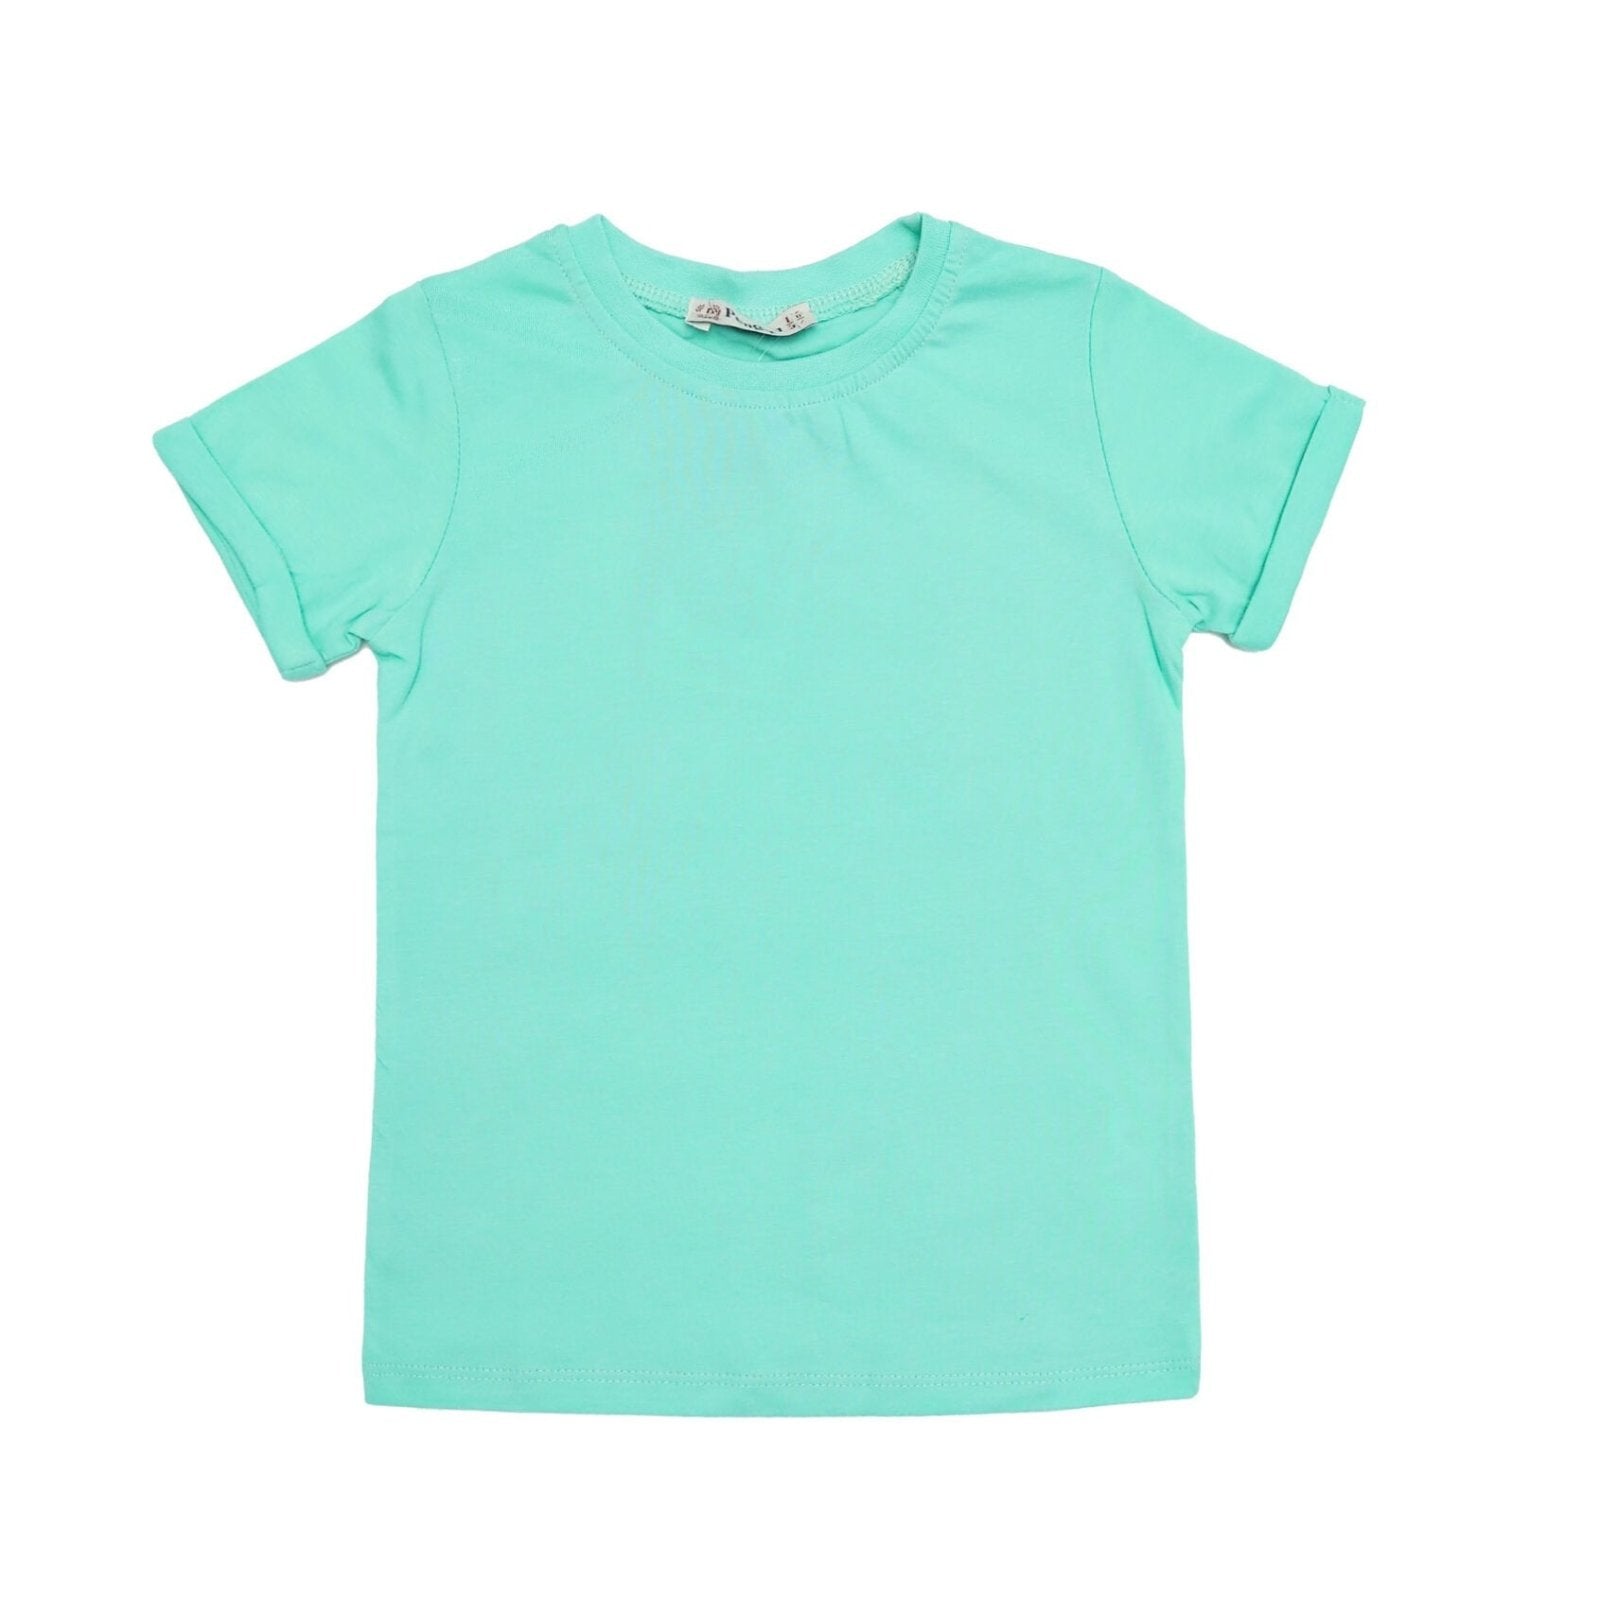 Boys Shirt Sea green Color | Made in Turkey - Zubaidas Mothershop